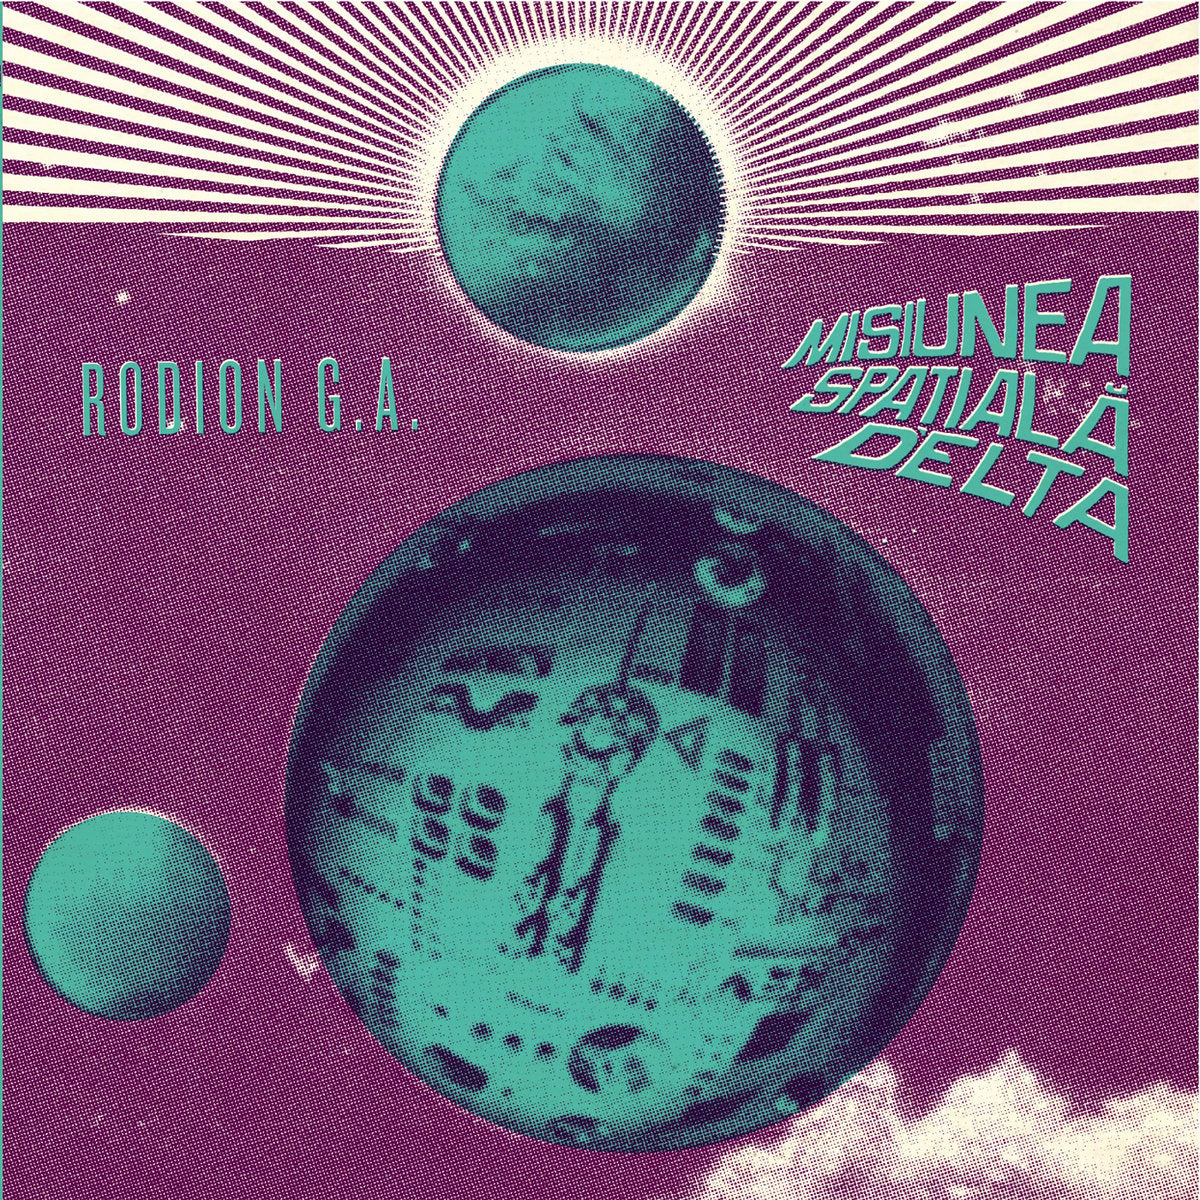 Rodion G.A. - Misiunea Spatiala Delta (Delta Space Mission)